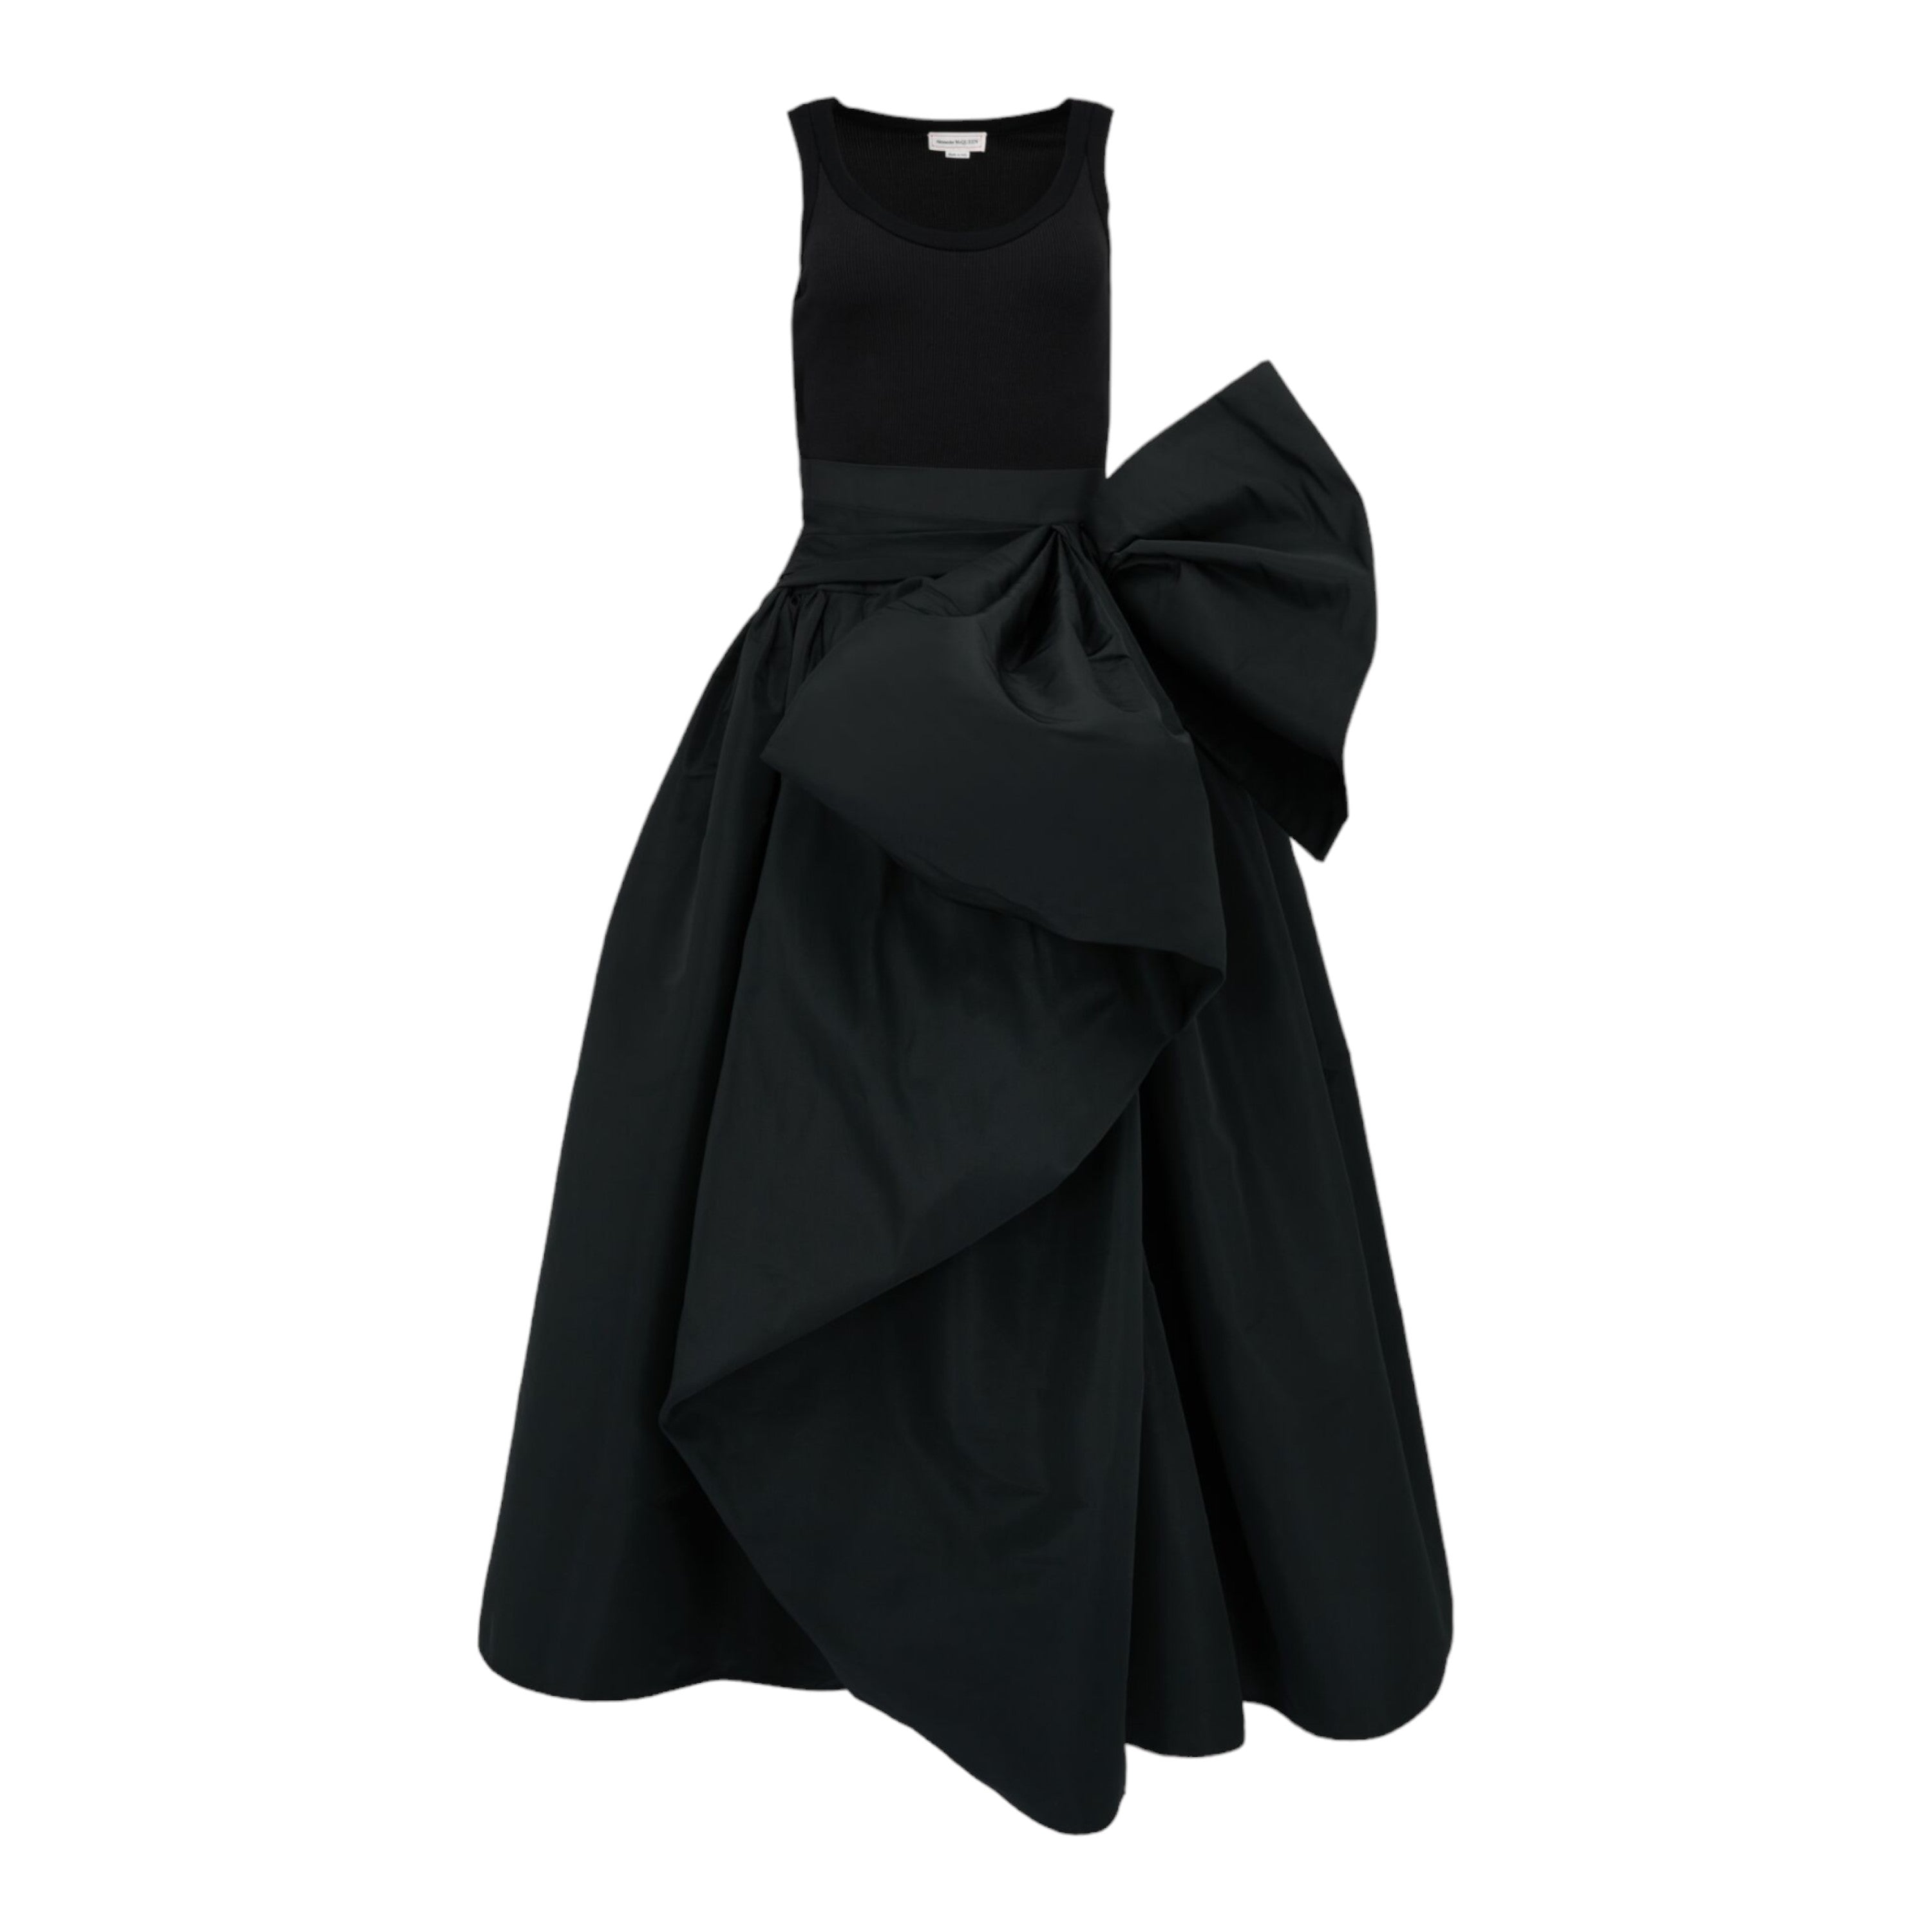 Women's Hybrid Bow Dress in Black